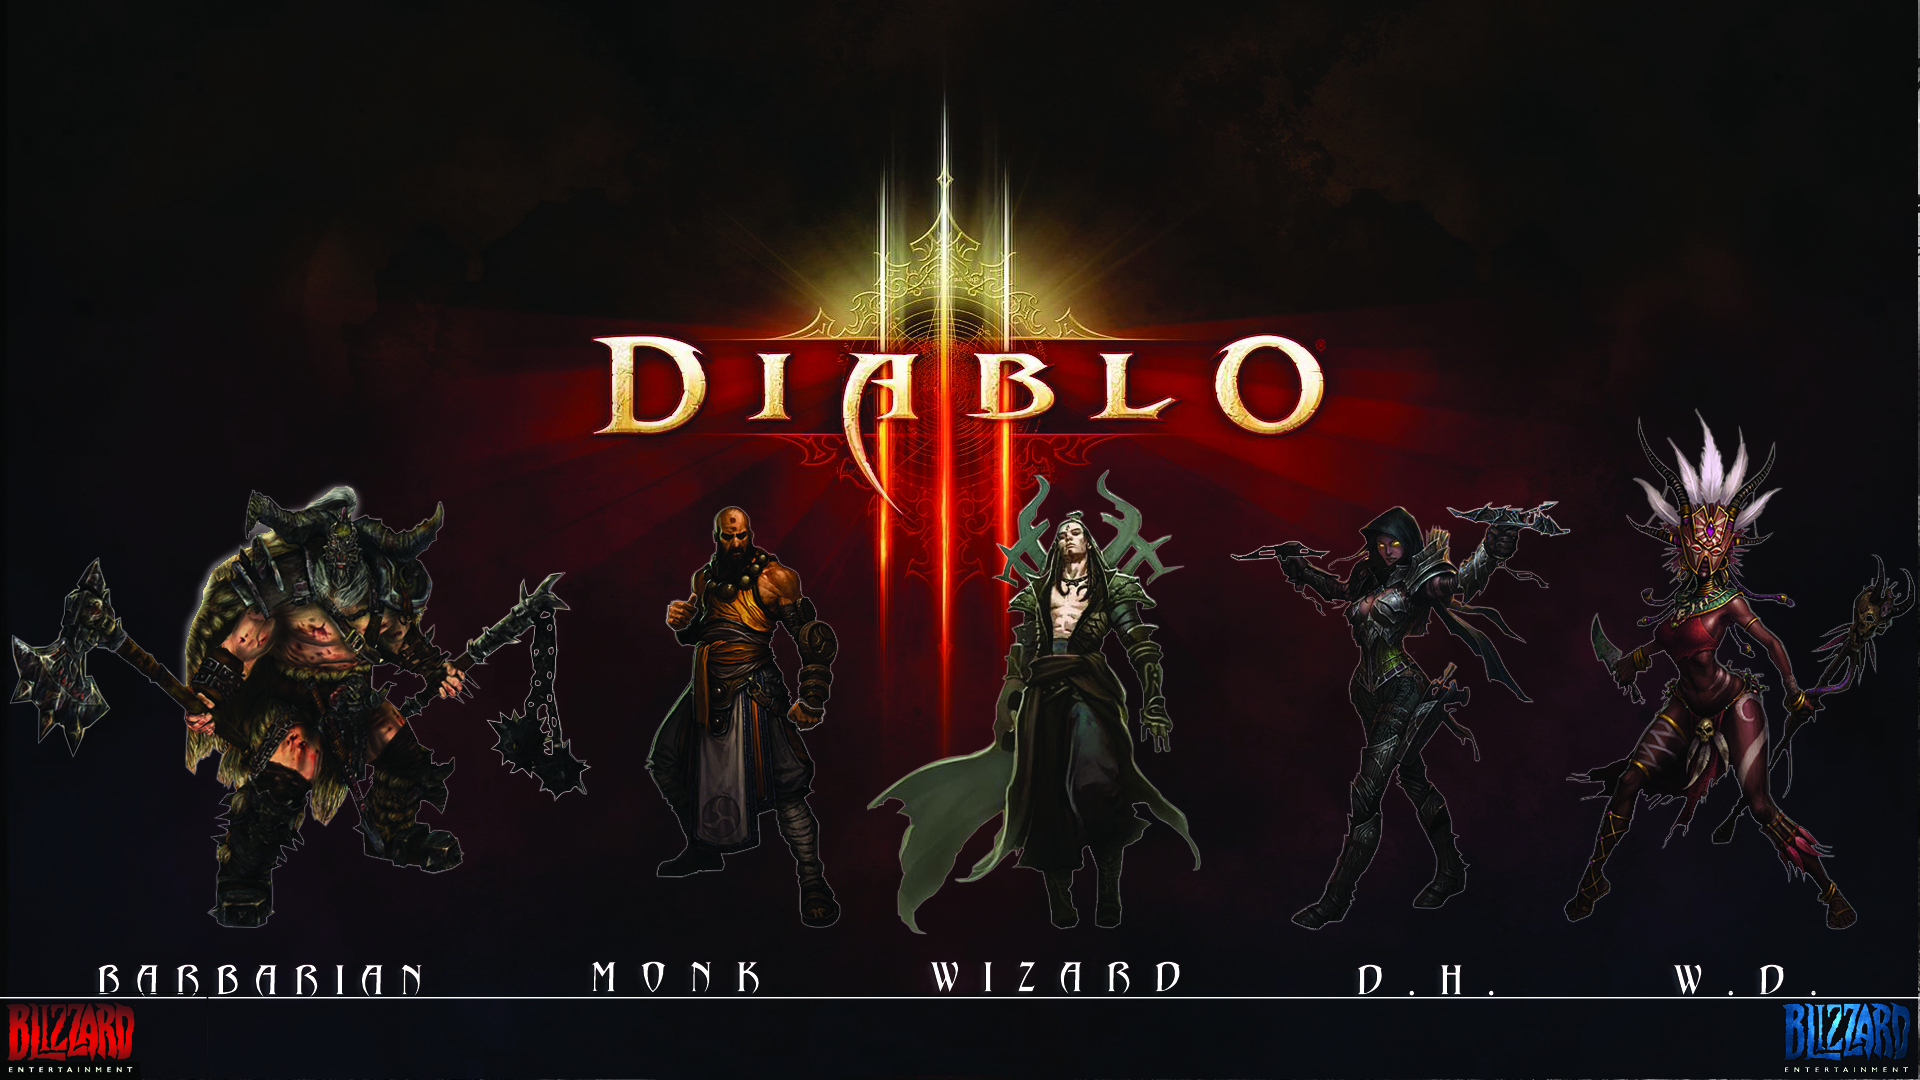 Diablo Iii Barbarian Diablo Iii Monk Diablo Iii Wizard Diablo Iii Demon Hunter Diablo Iii Witch Doct 1920x1080